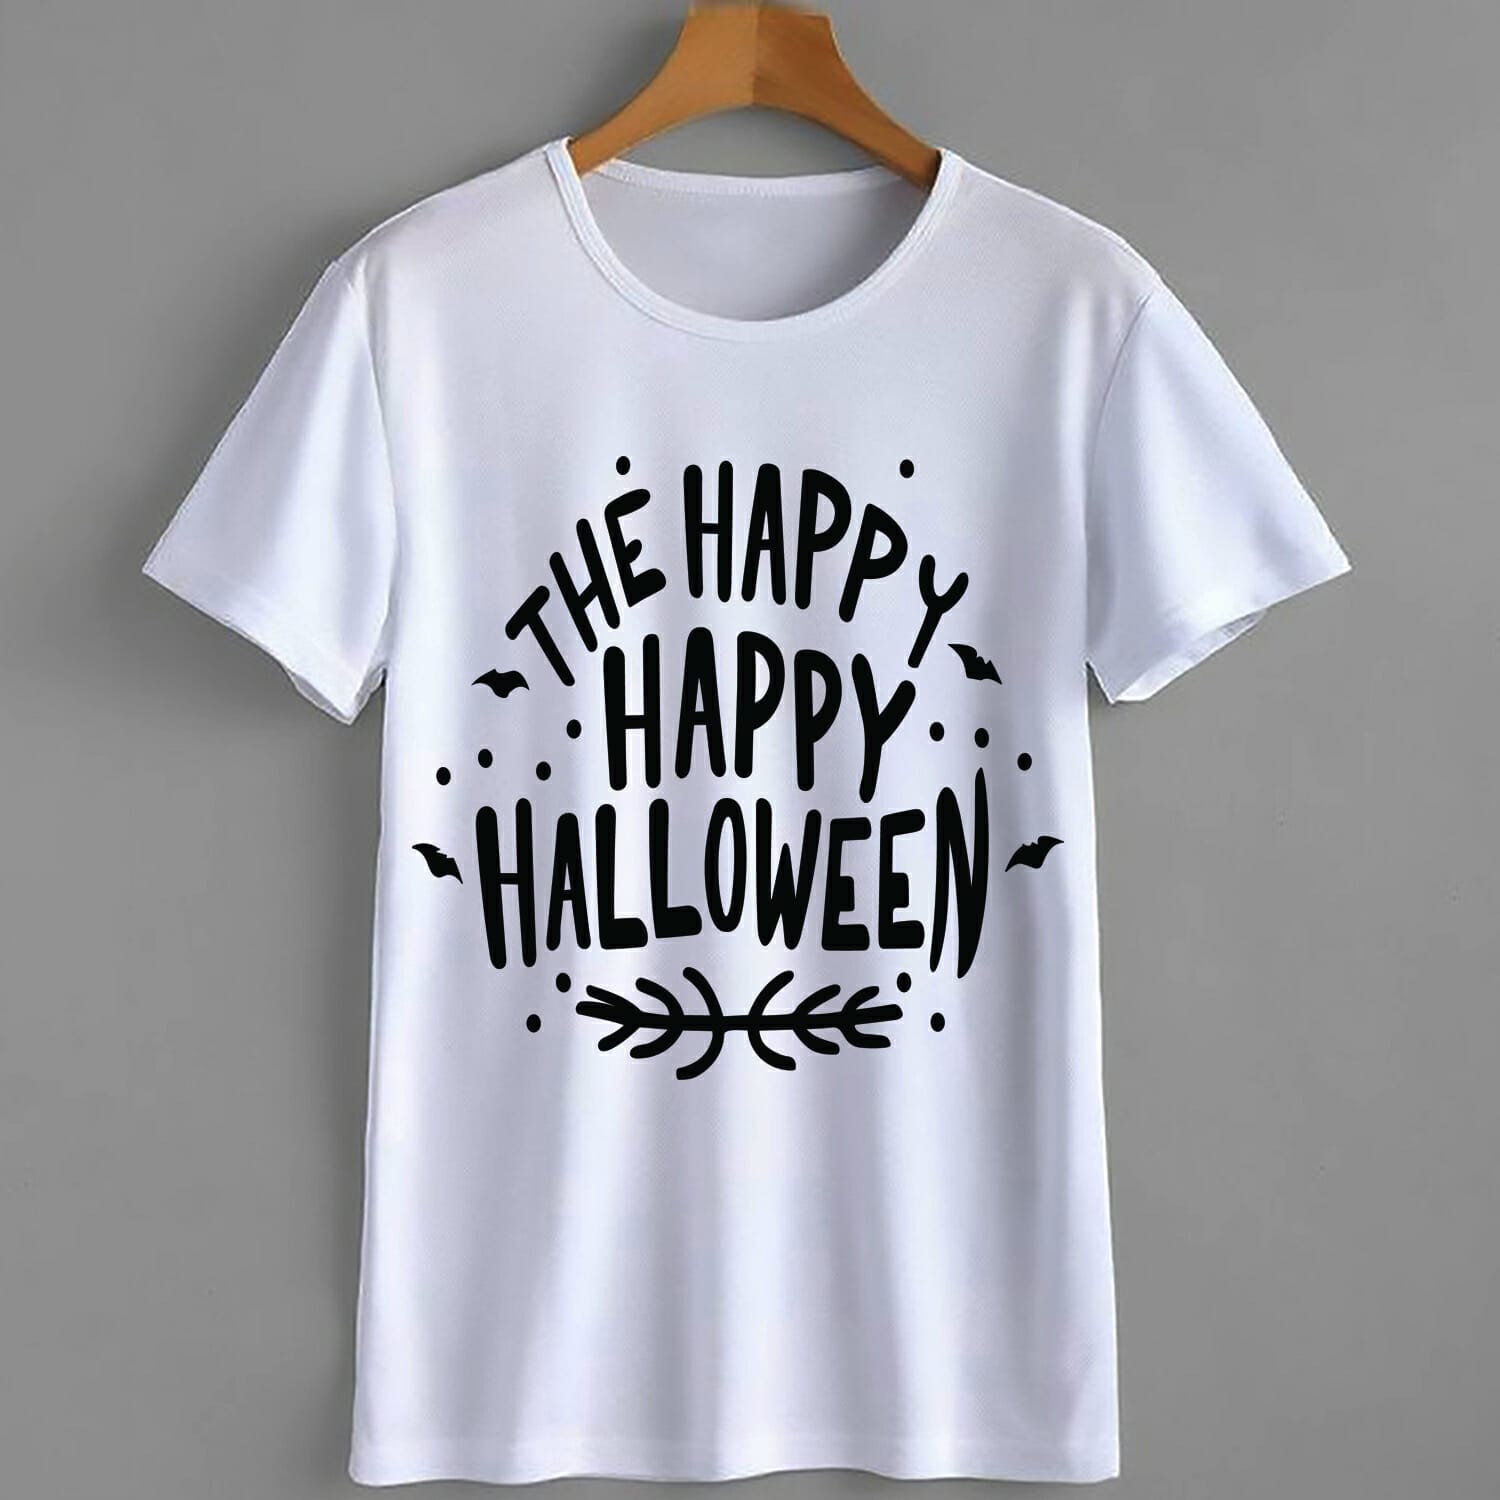 Free T shirt Design Happy Halloween